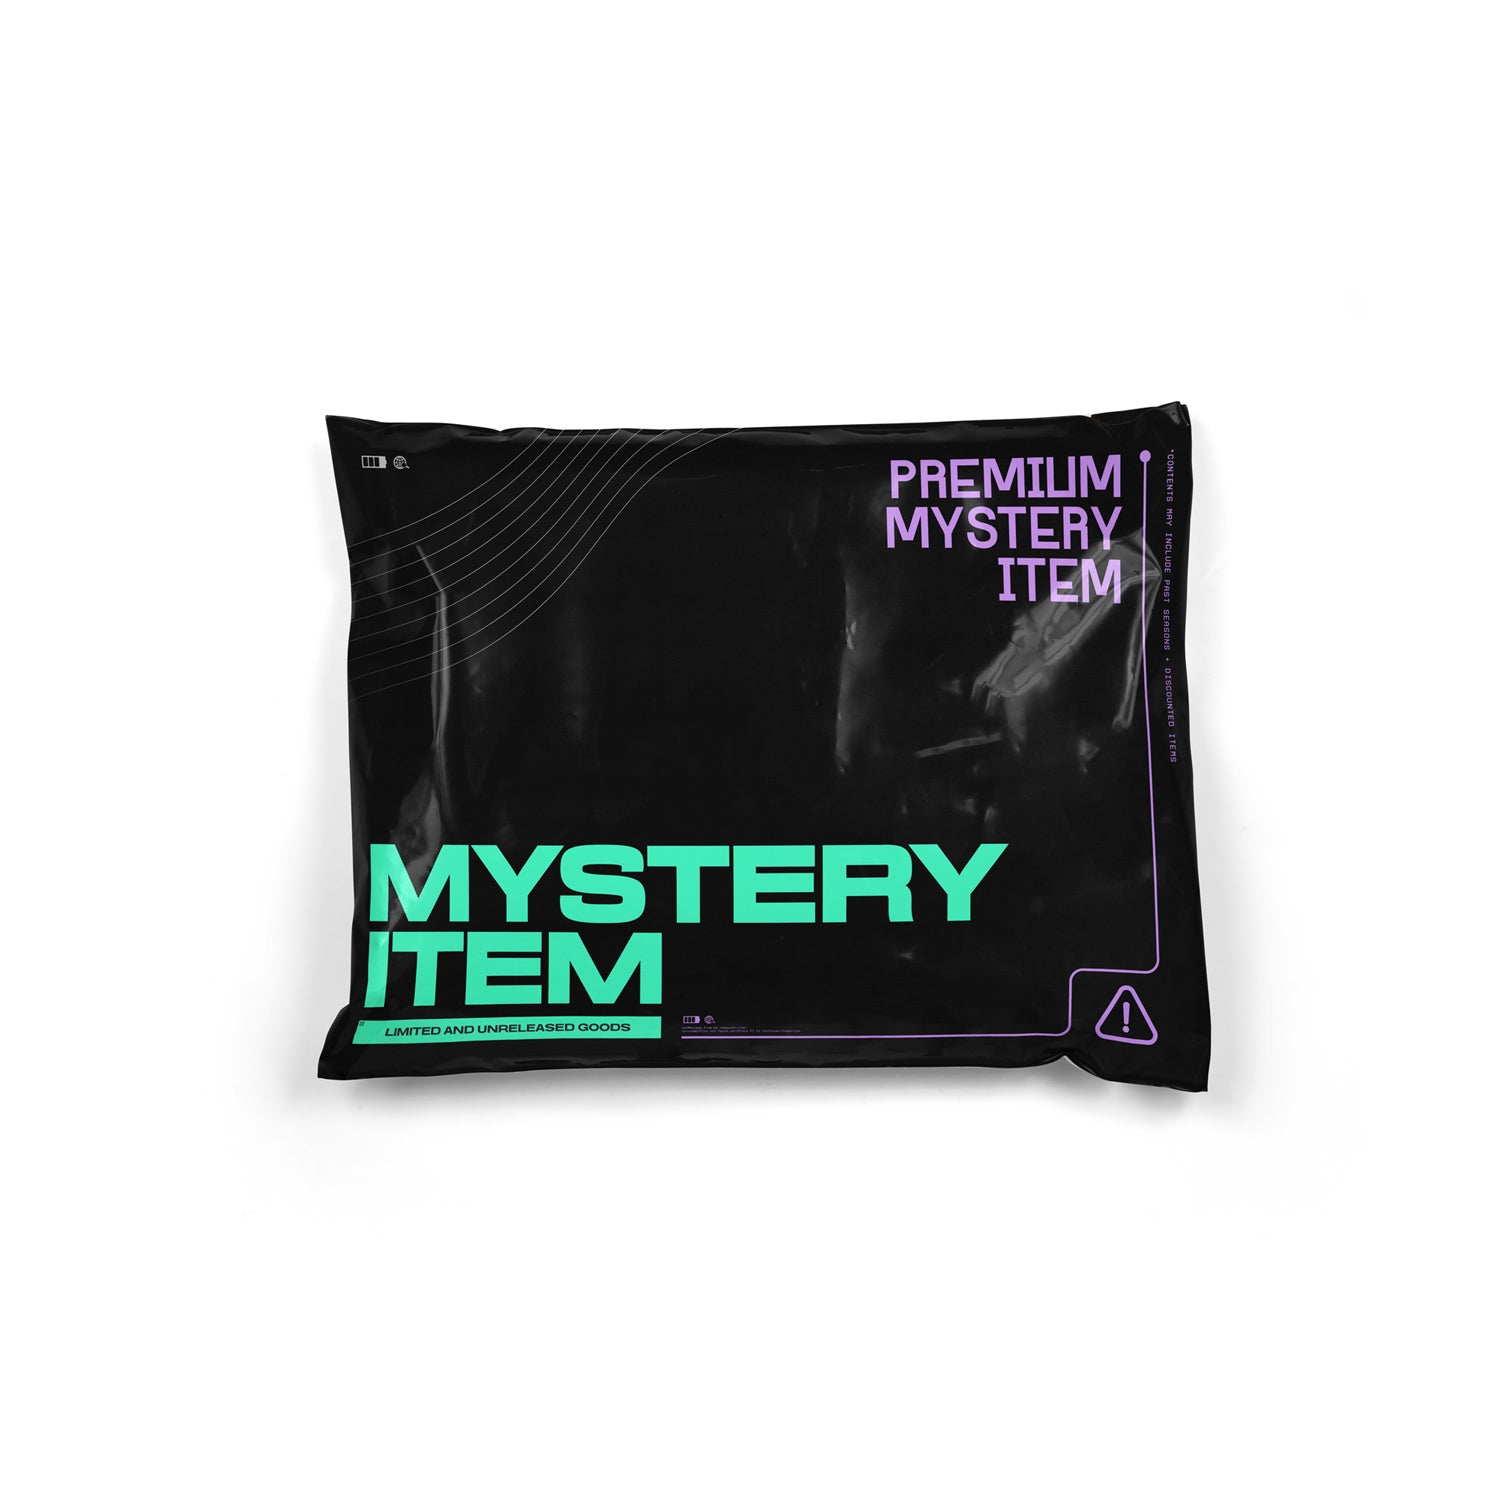 Image of Premium Mystery Item PREMILM MYSTERY 